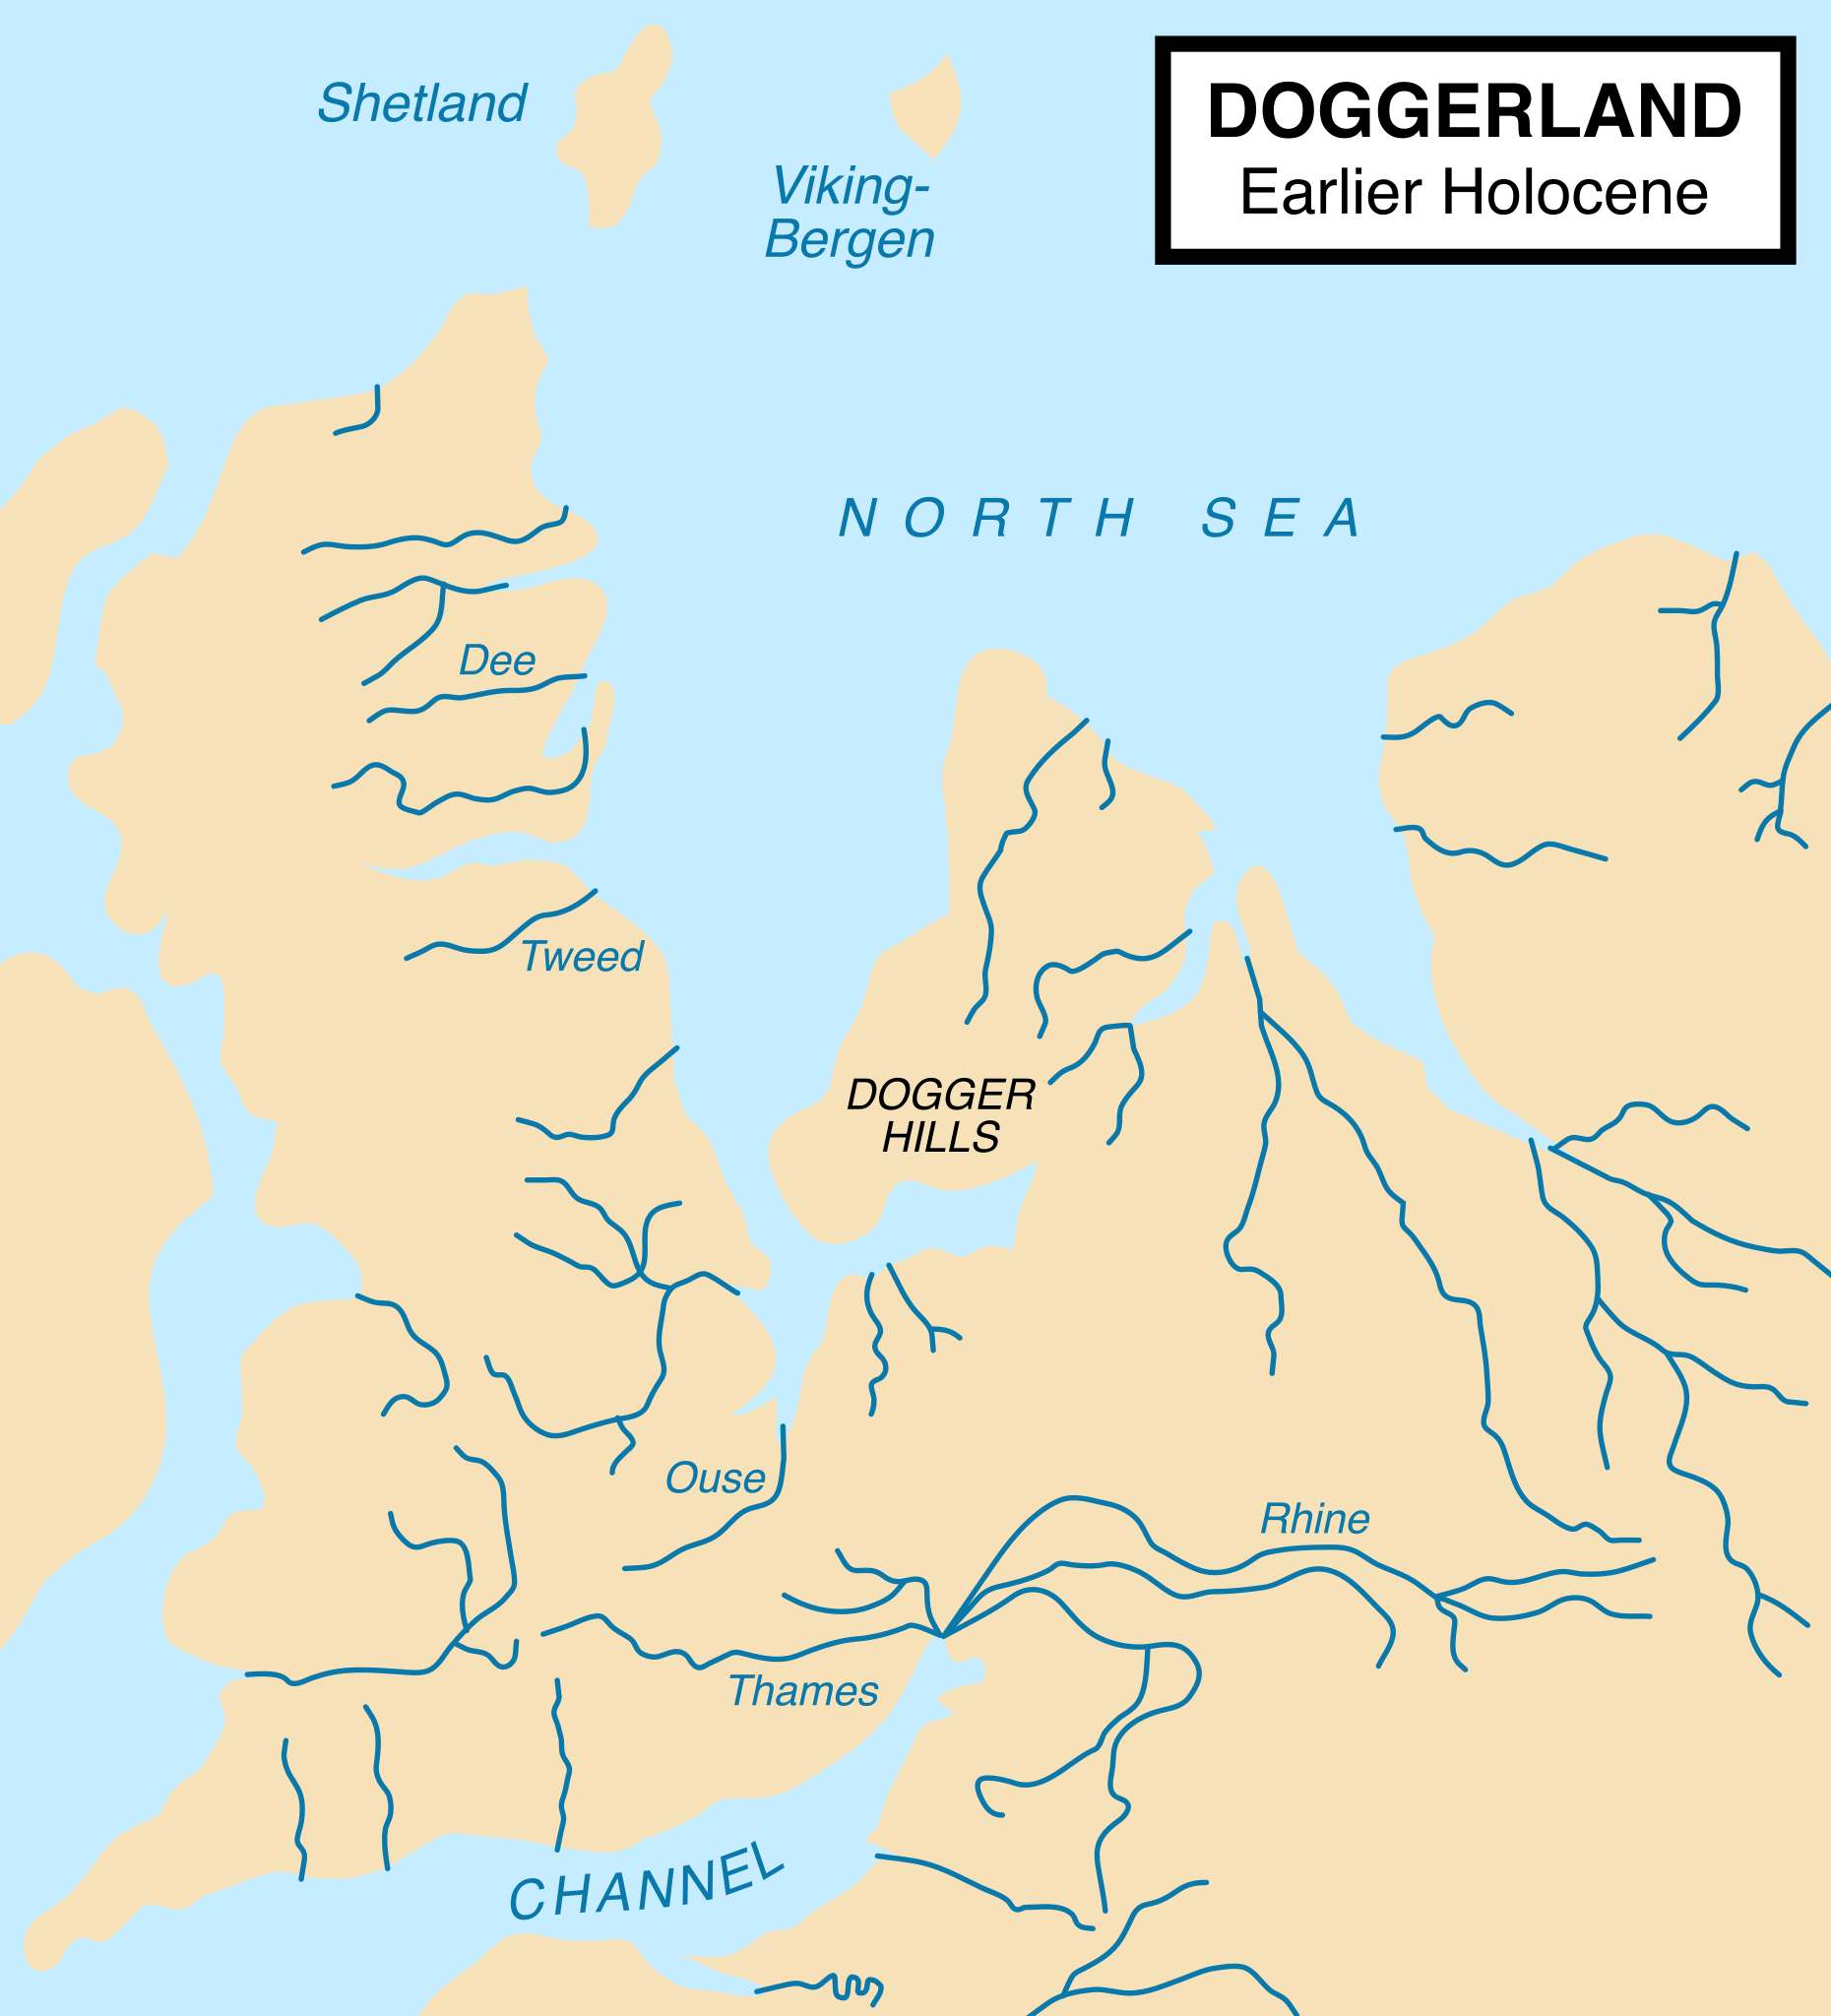 Prehistoric Doggerland: The secrets of the Atlantis of Britain 2